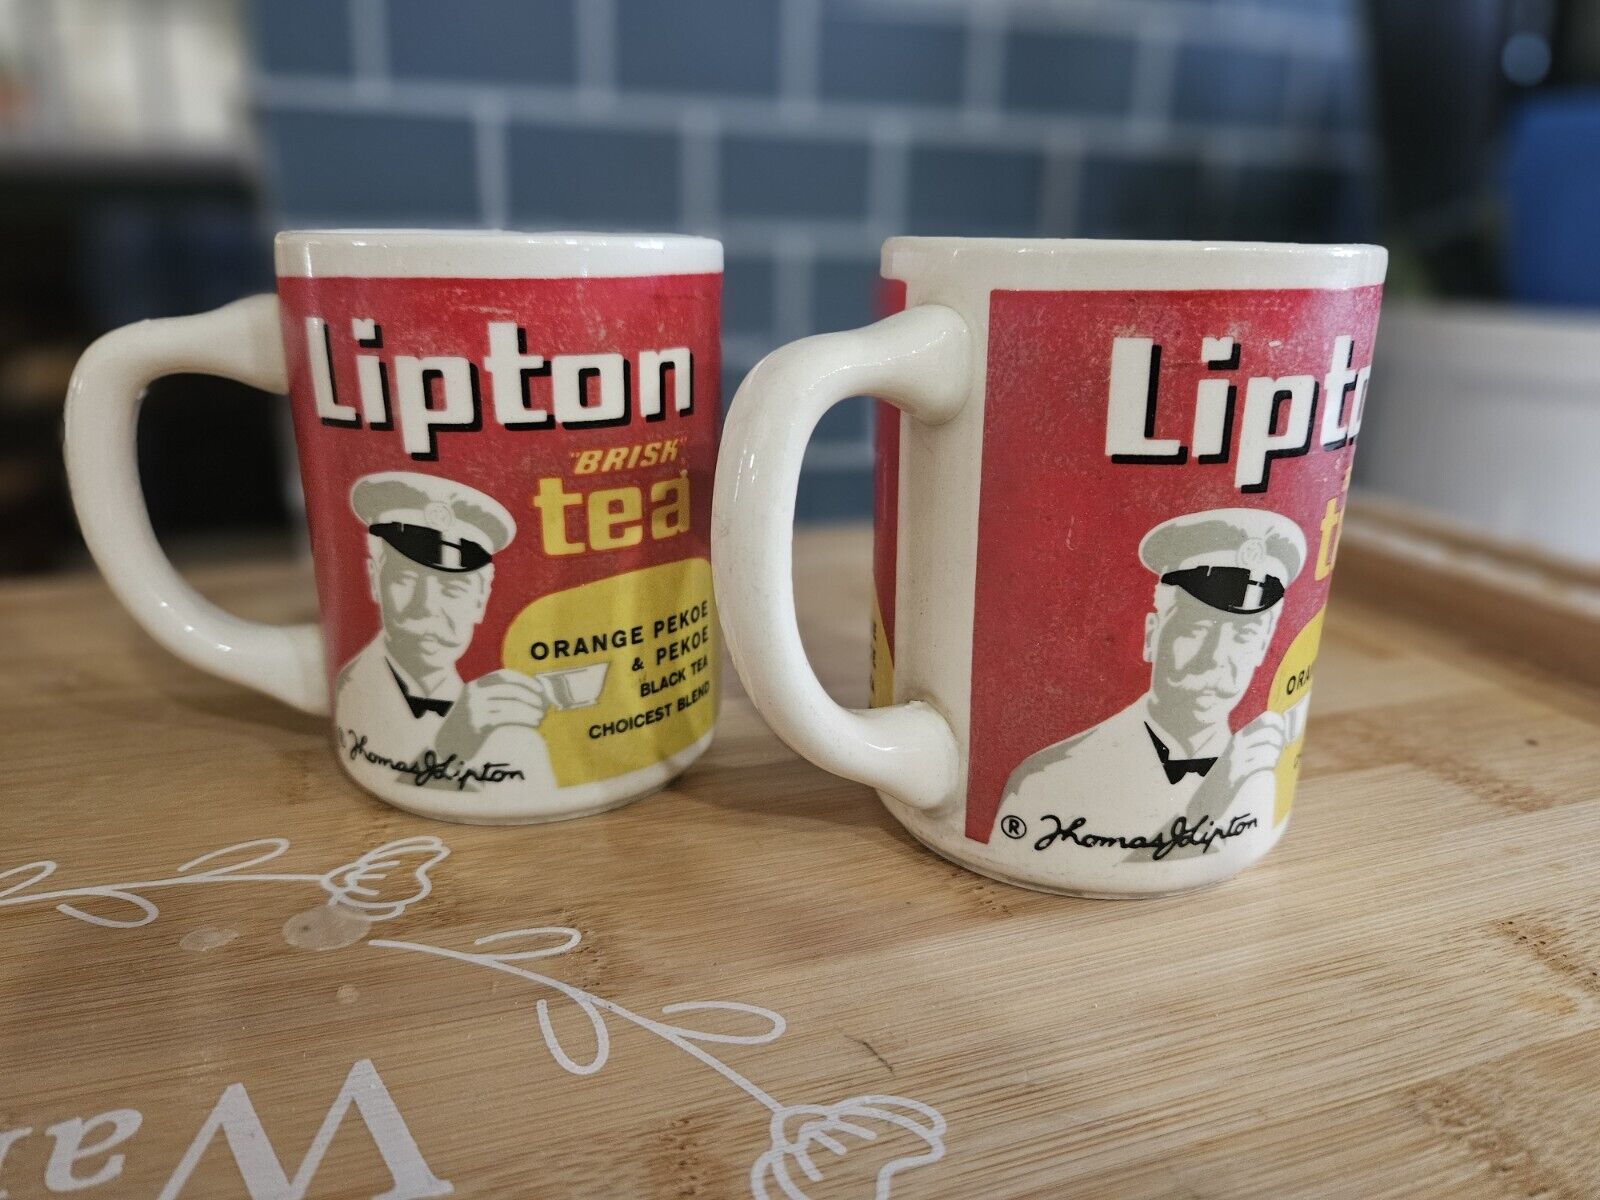 Pair Vtg Thomas Lipton Tea Brisk Orange Pekoe Black Choicest Red Mug Cup Ceramic